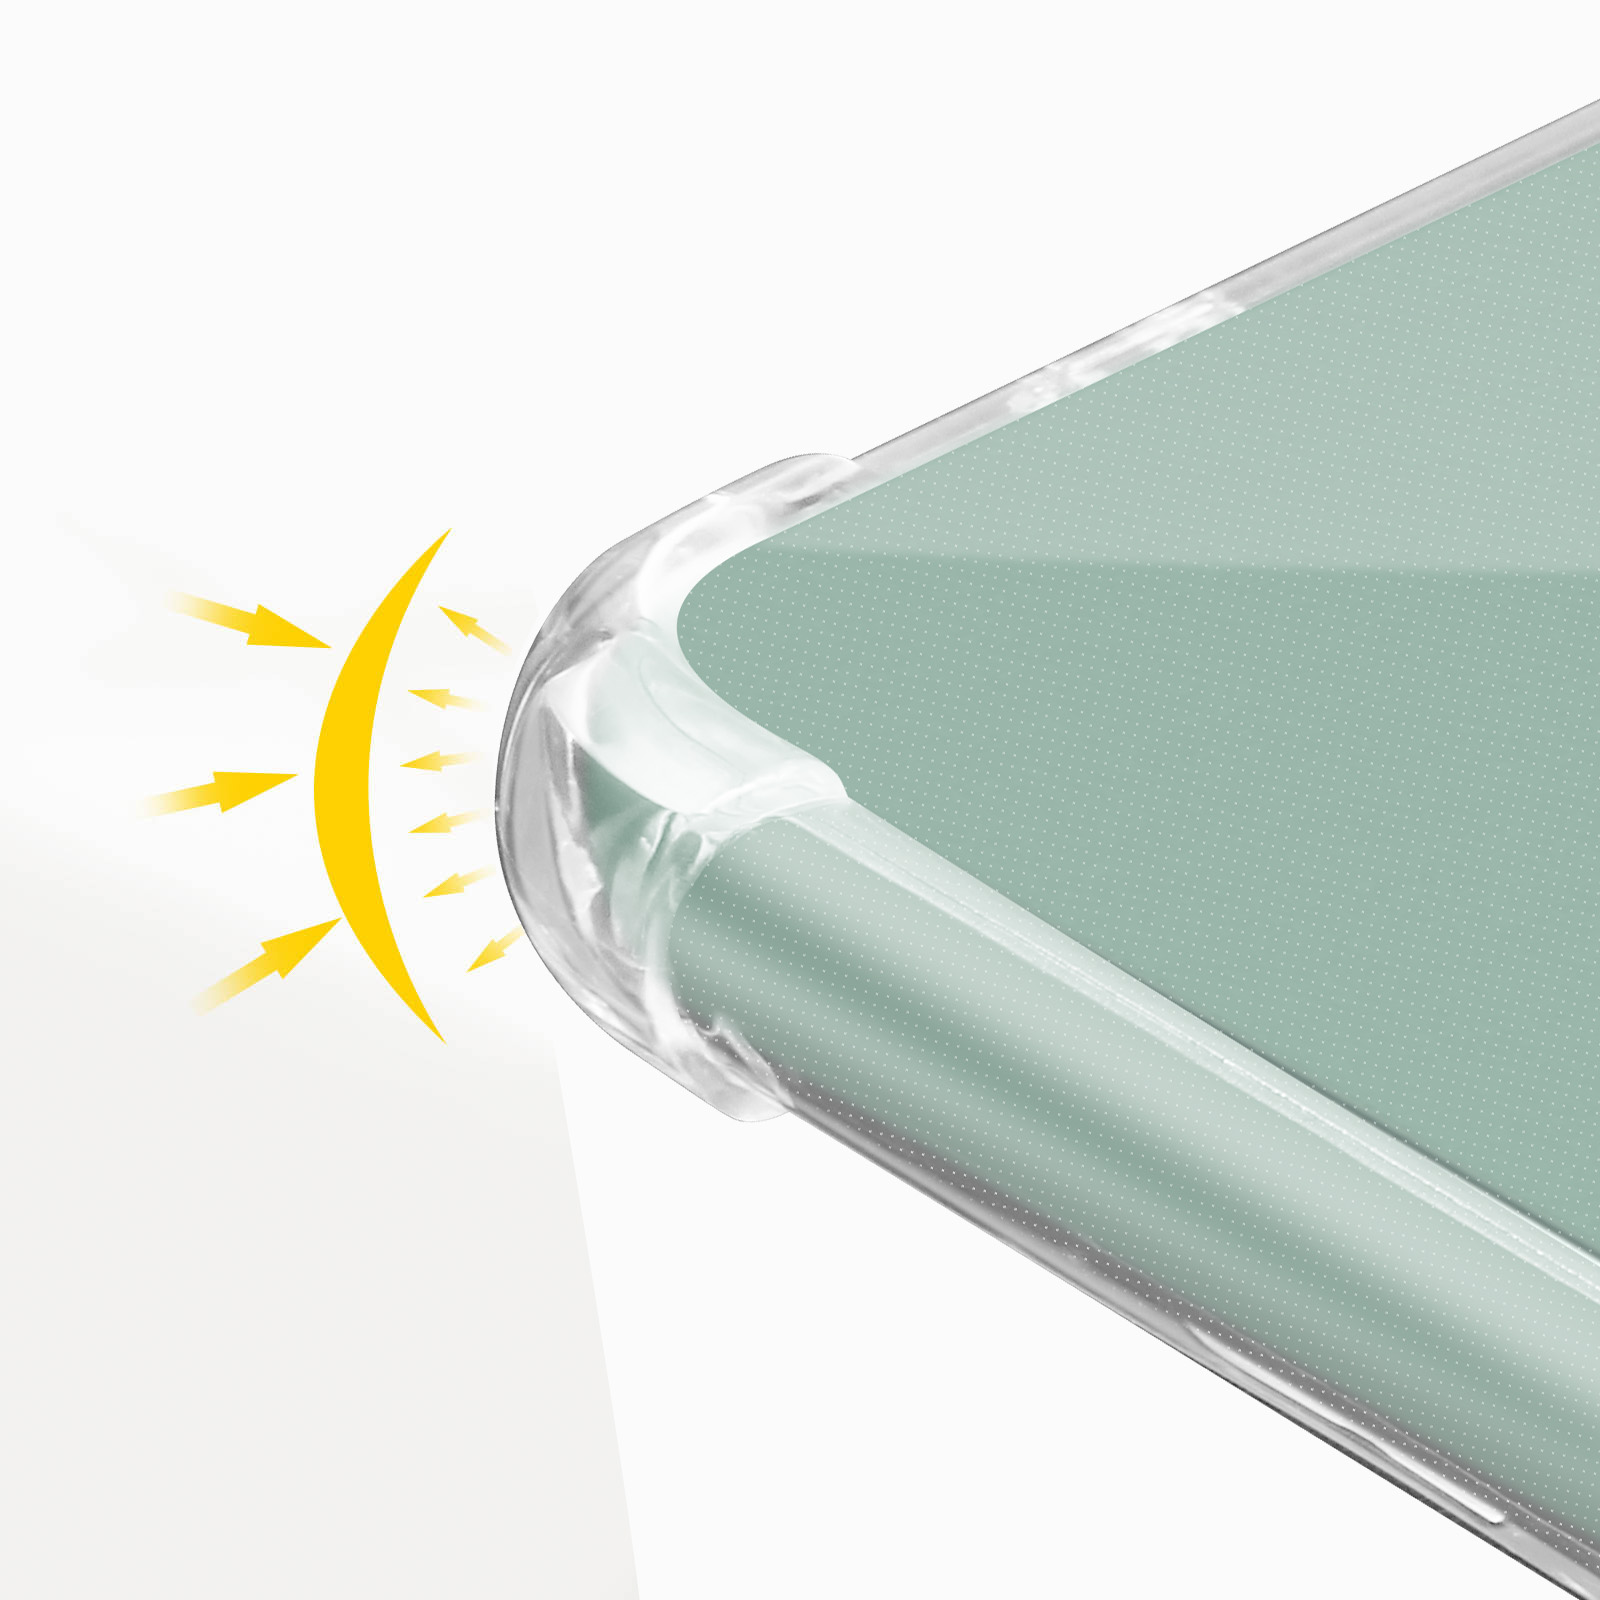 AVIZAR Refined Series, Backcover, Samsung, Galaxy 5G, Transparent A73